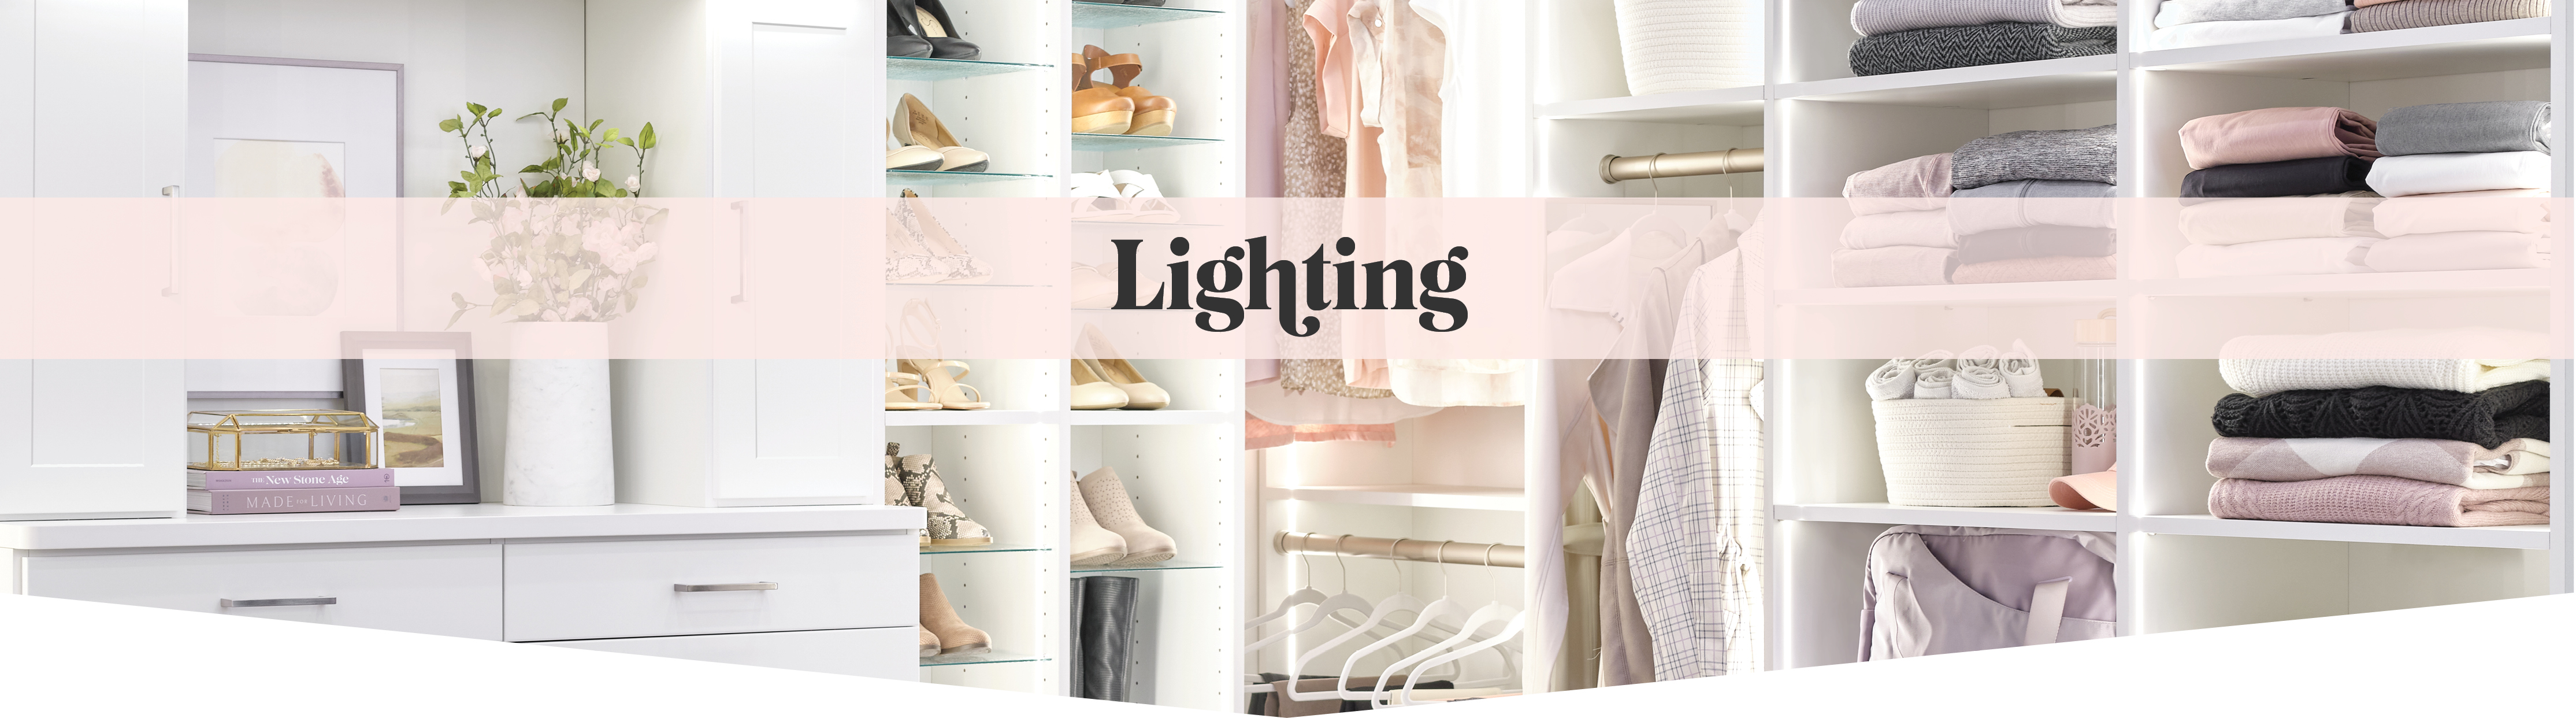 Custom lighting for your custom organization from Inspired Closets